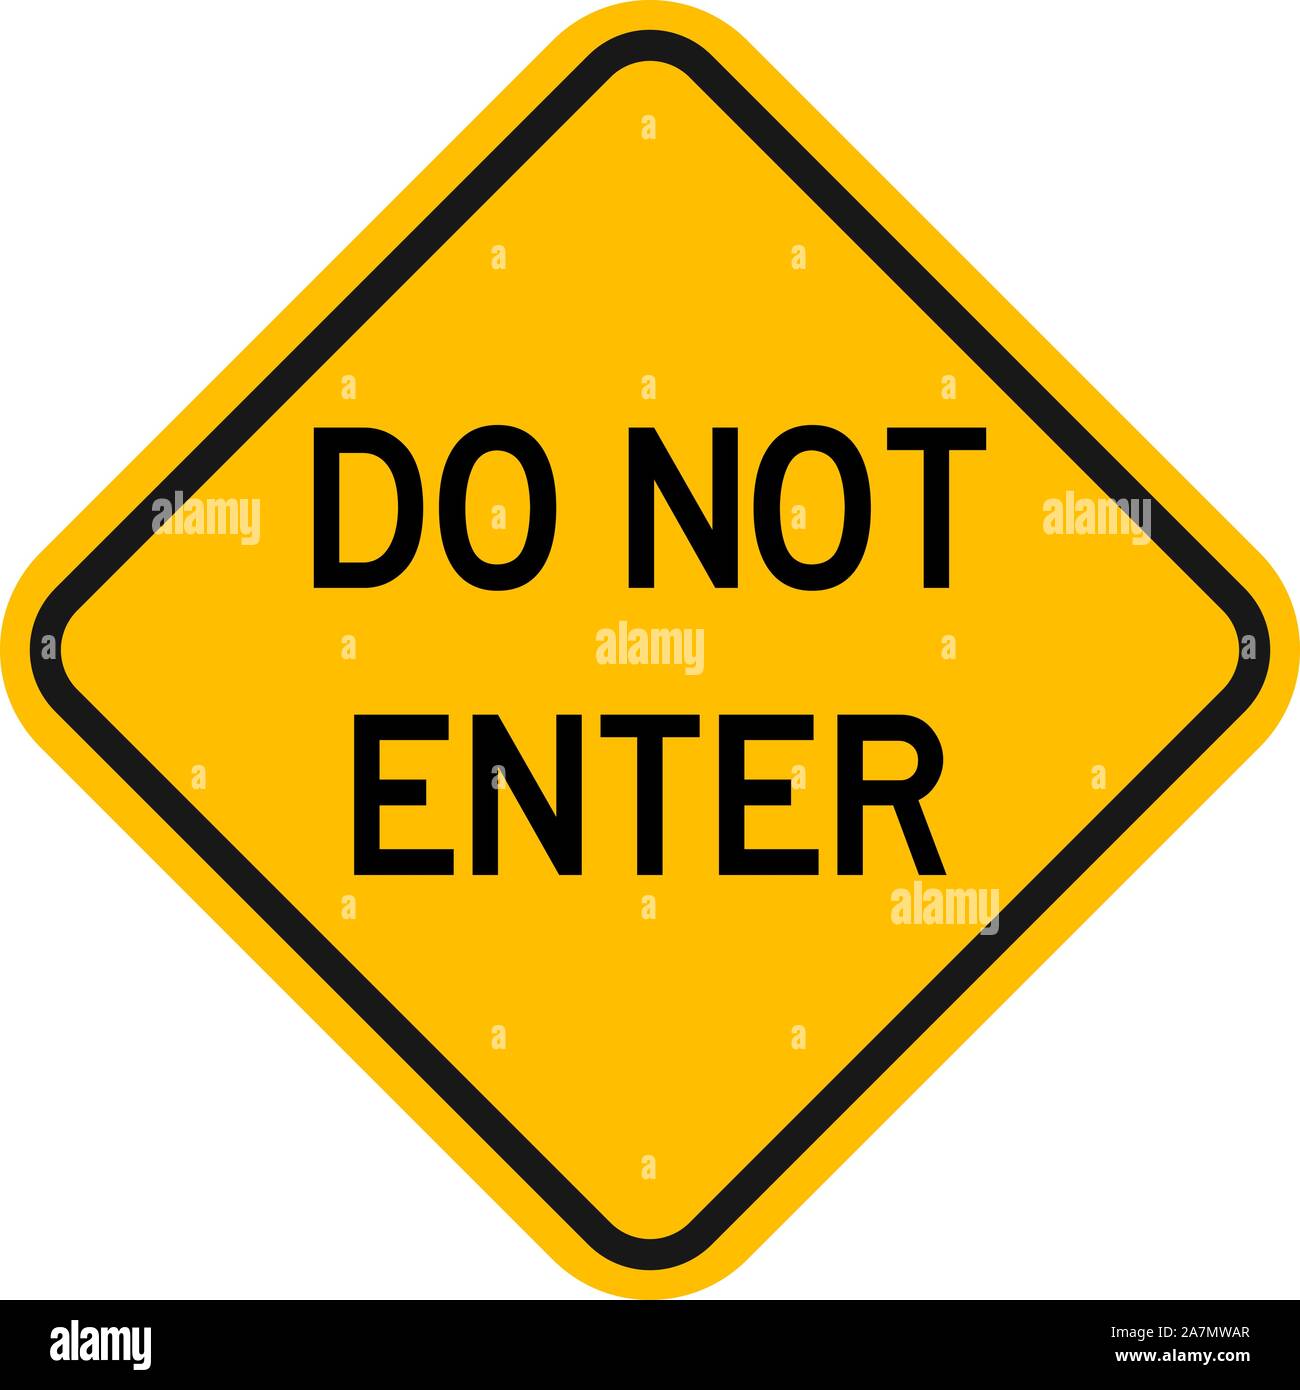 Do Not Enter Sign Traffic Warning Symbol Vector Illustration Yellow Diamond Road Sign Stock Vector Image Art Alamy